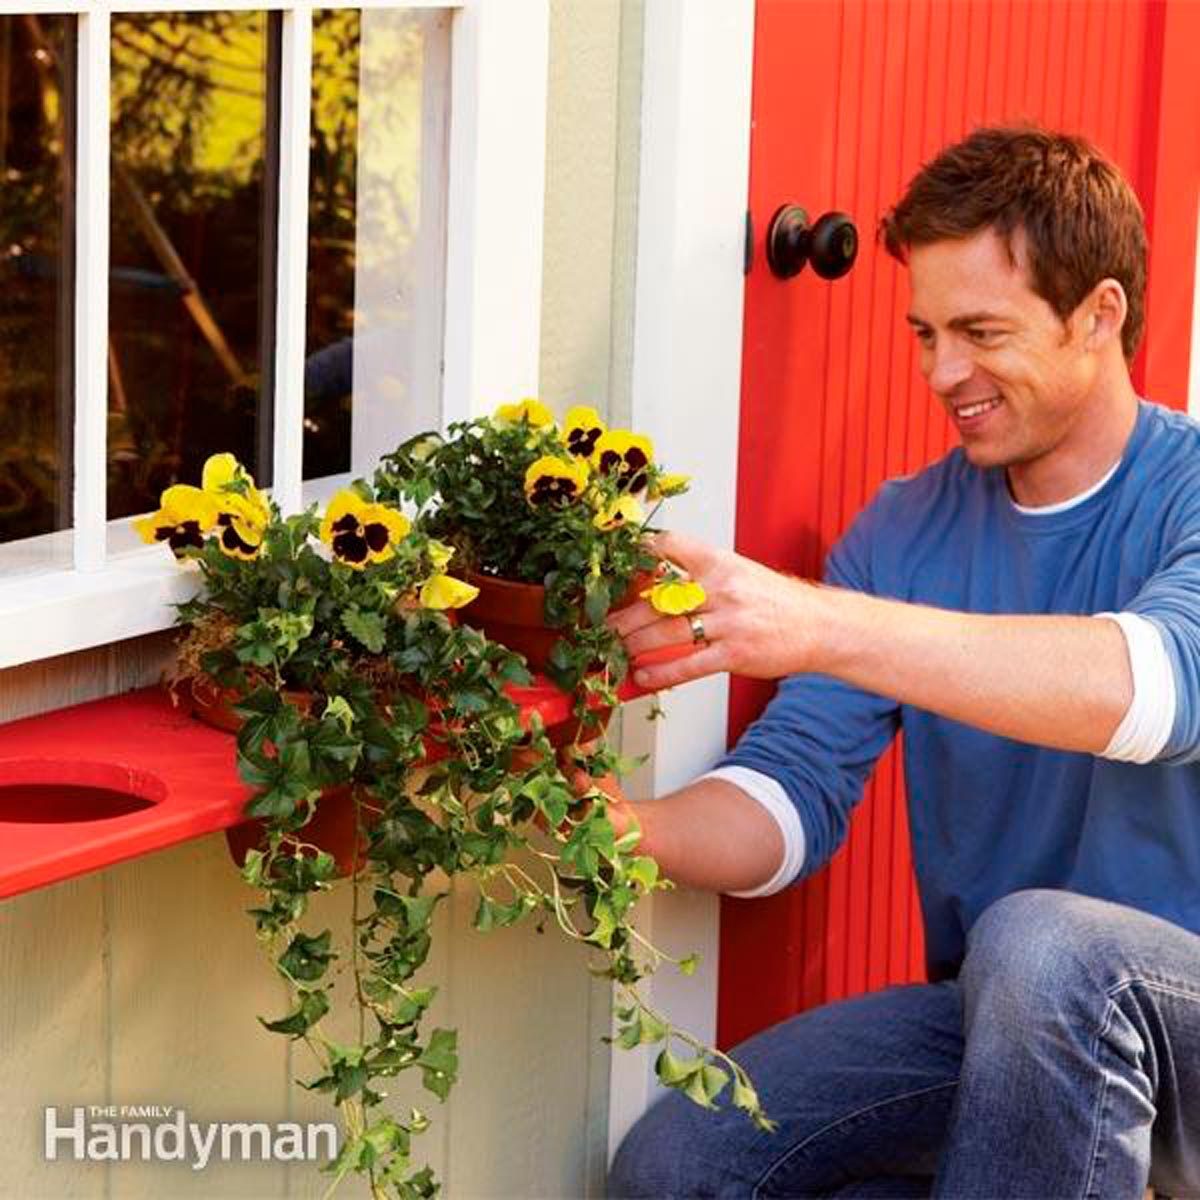 DIY Gardener: 3 Steps to Impress with the Perfect Planter - BrazenWoman